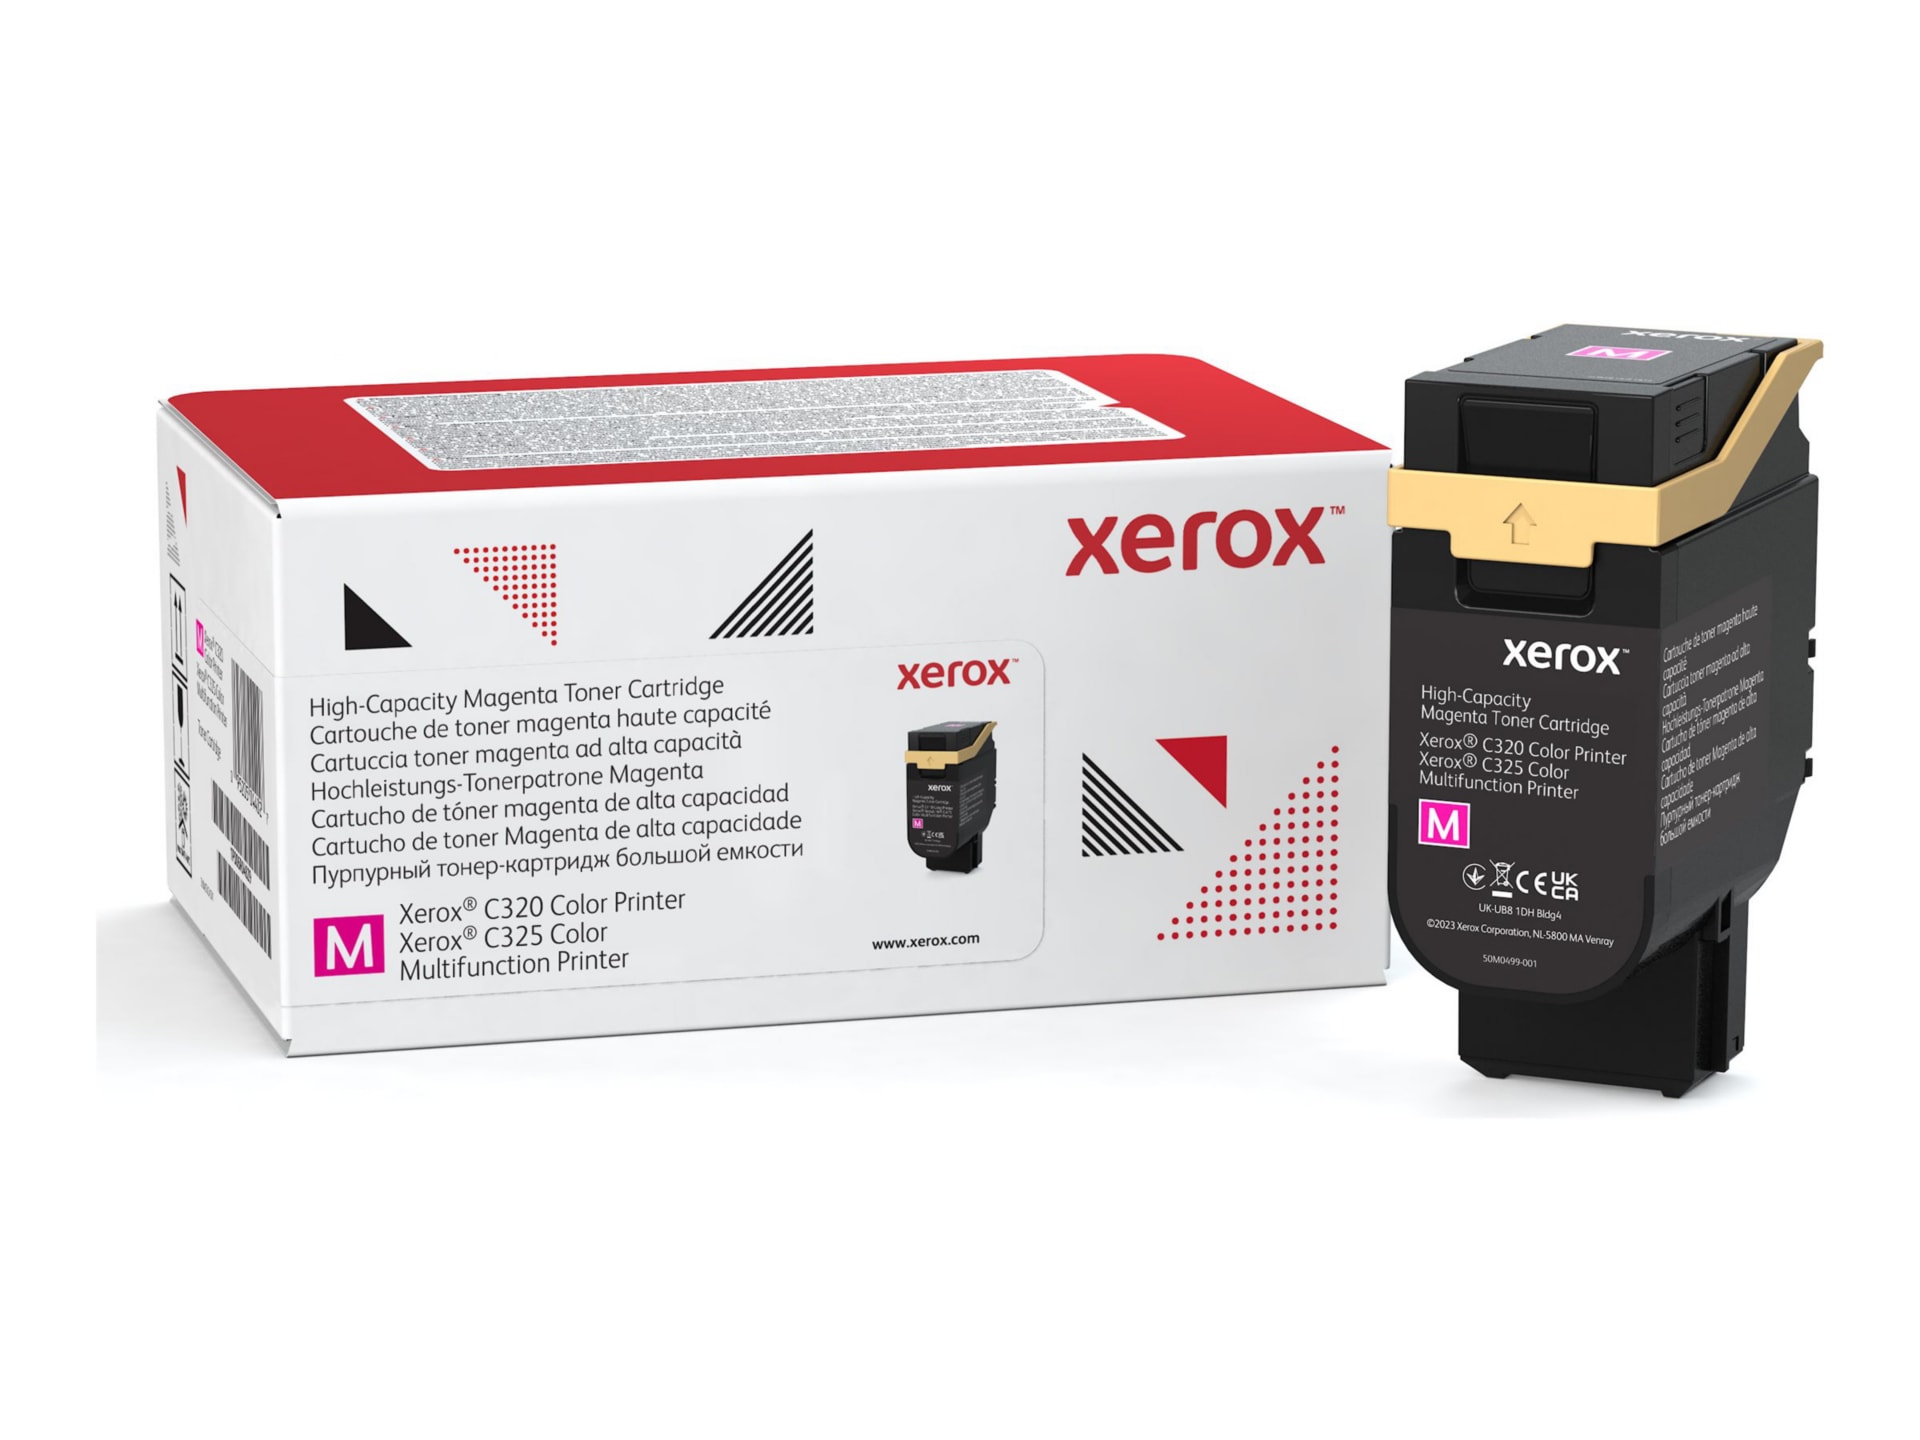 Xerox - High Capacity - magenta - original - toner cartridge